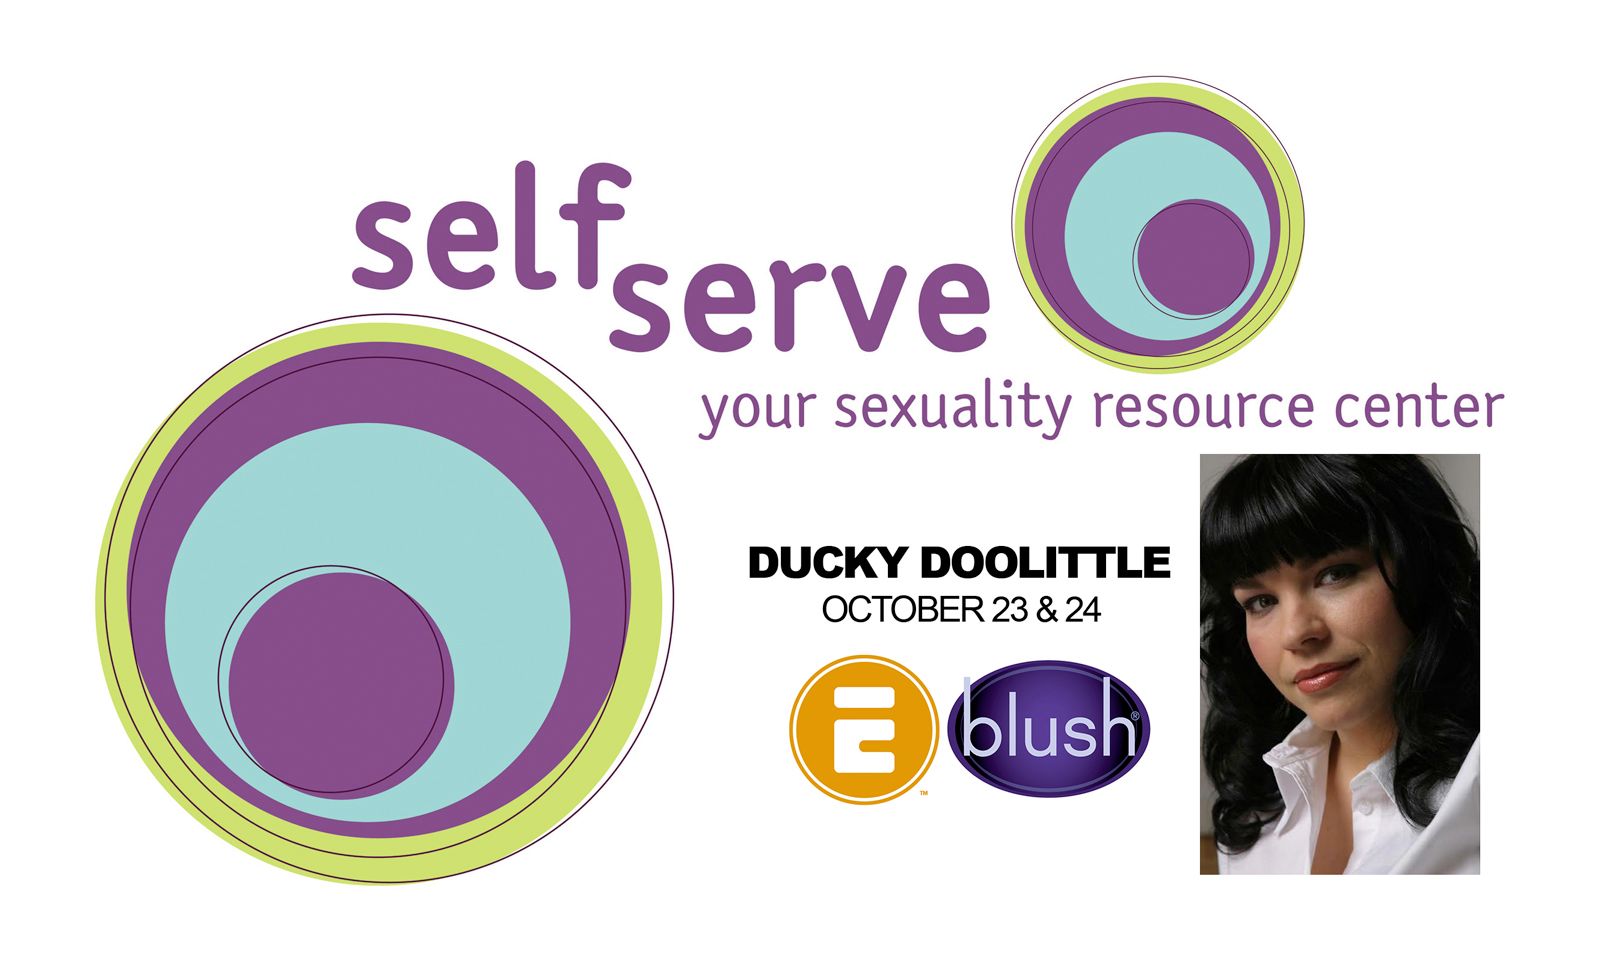 Ducky DooLittle Teaching 2 Free Classes at Self Serve